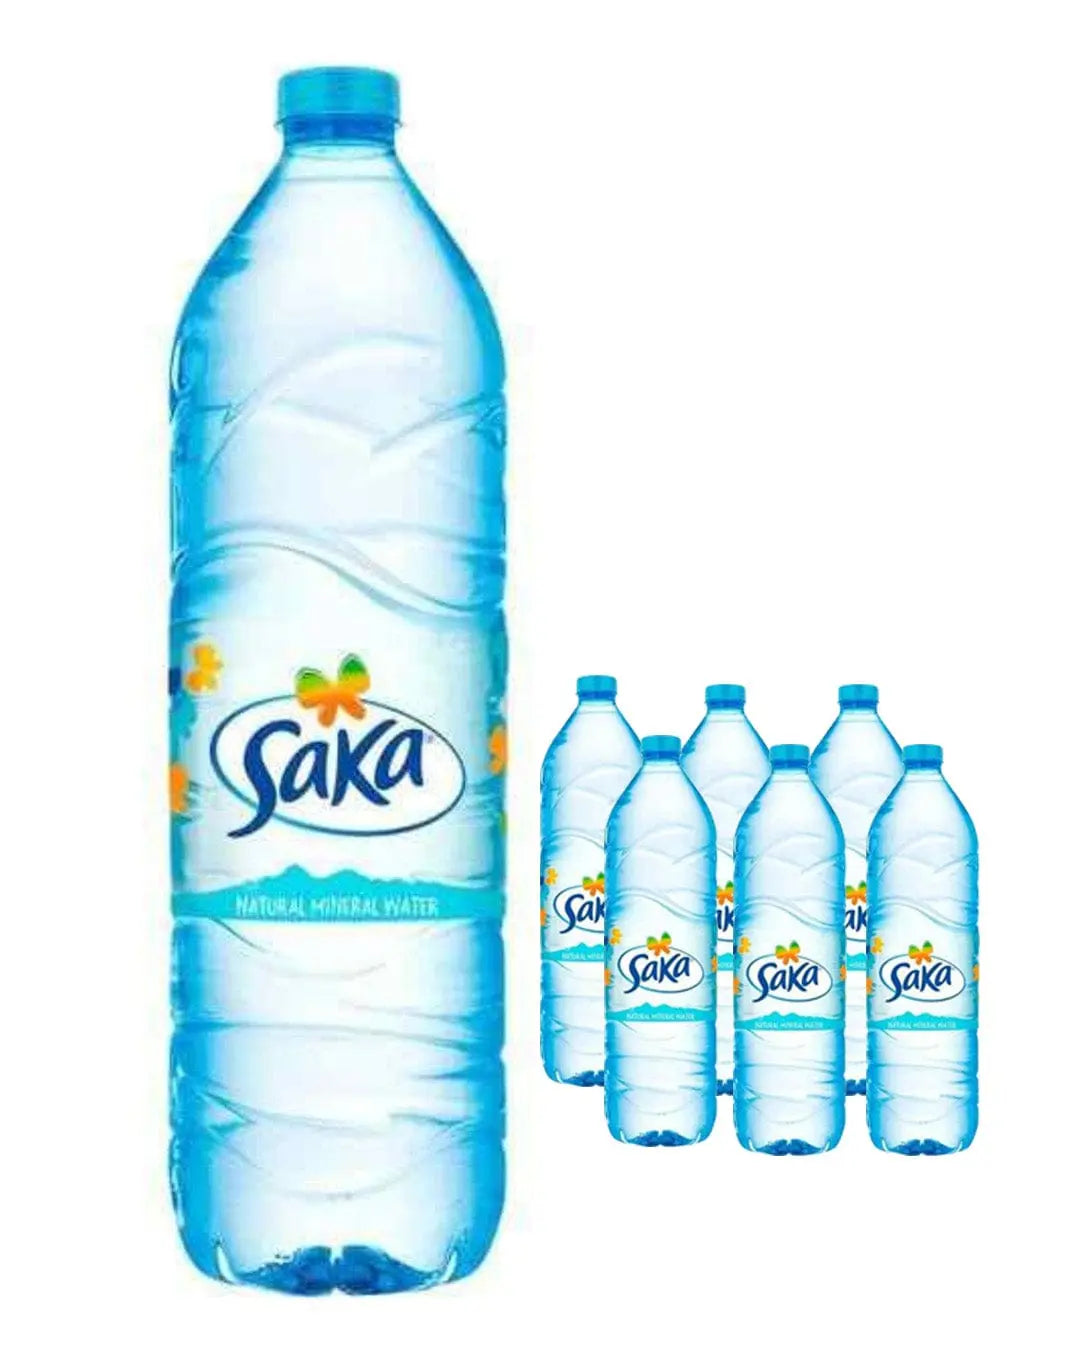 Saka Natural Mineral Water Multipack, 6 x 1.5 L Water